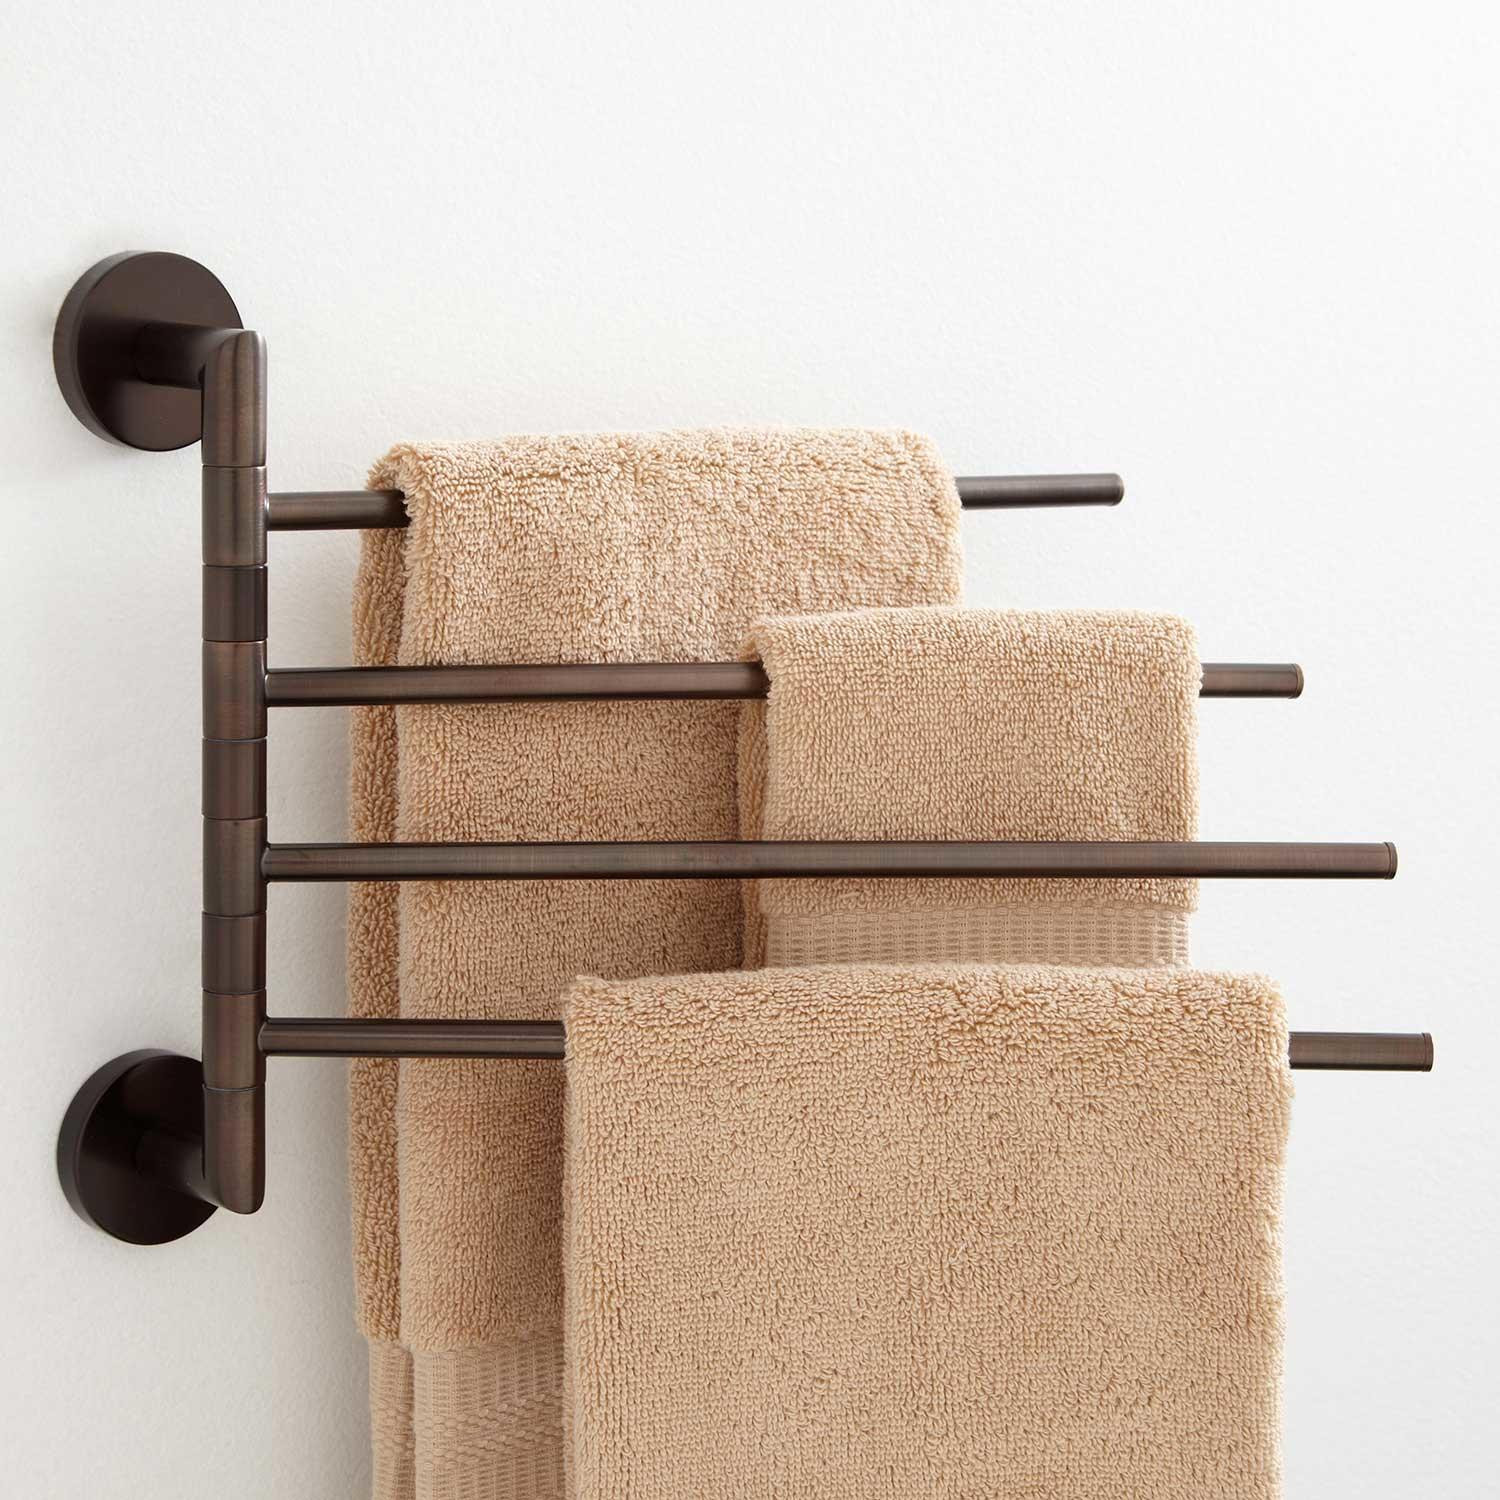 Best ideas about Bathroom Towel Bars
. Save or Pin Bristow Triple Swing Arm Towel Bar Bathroom Now.